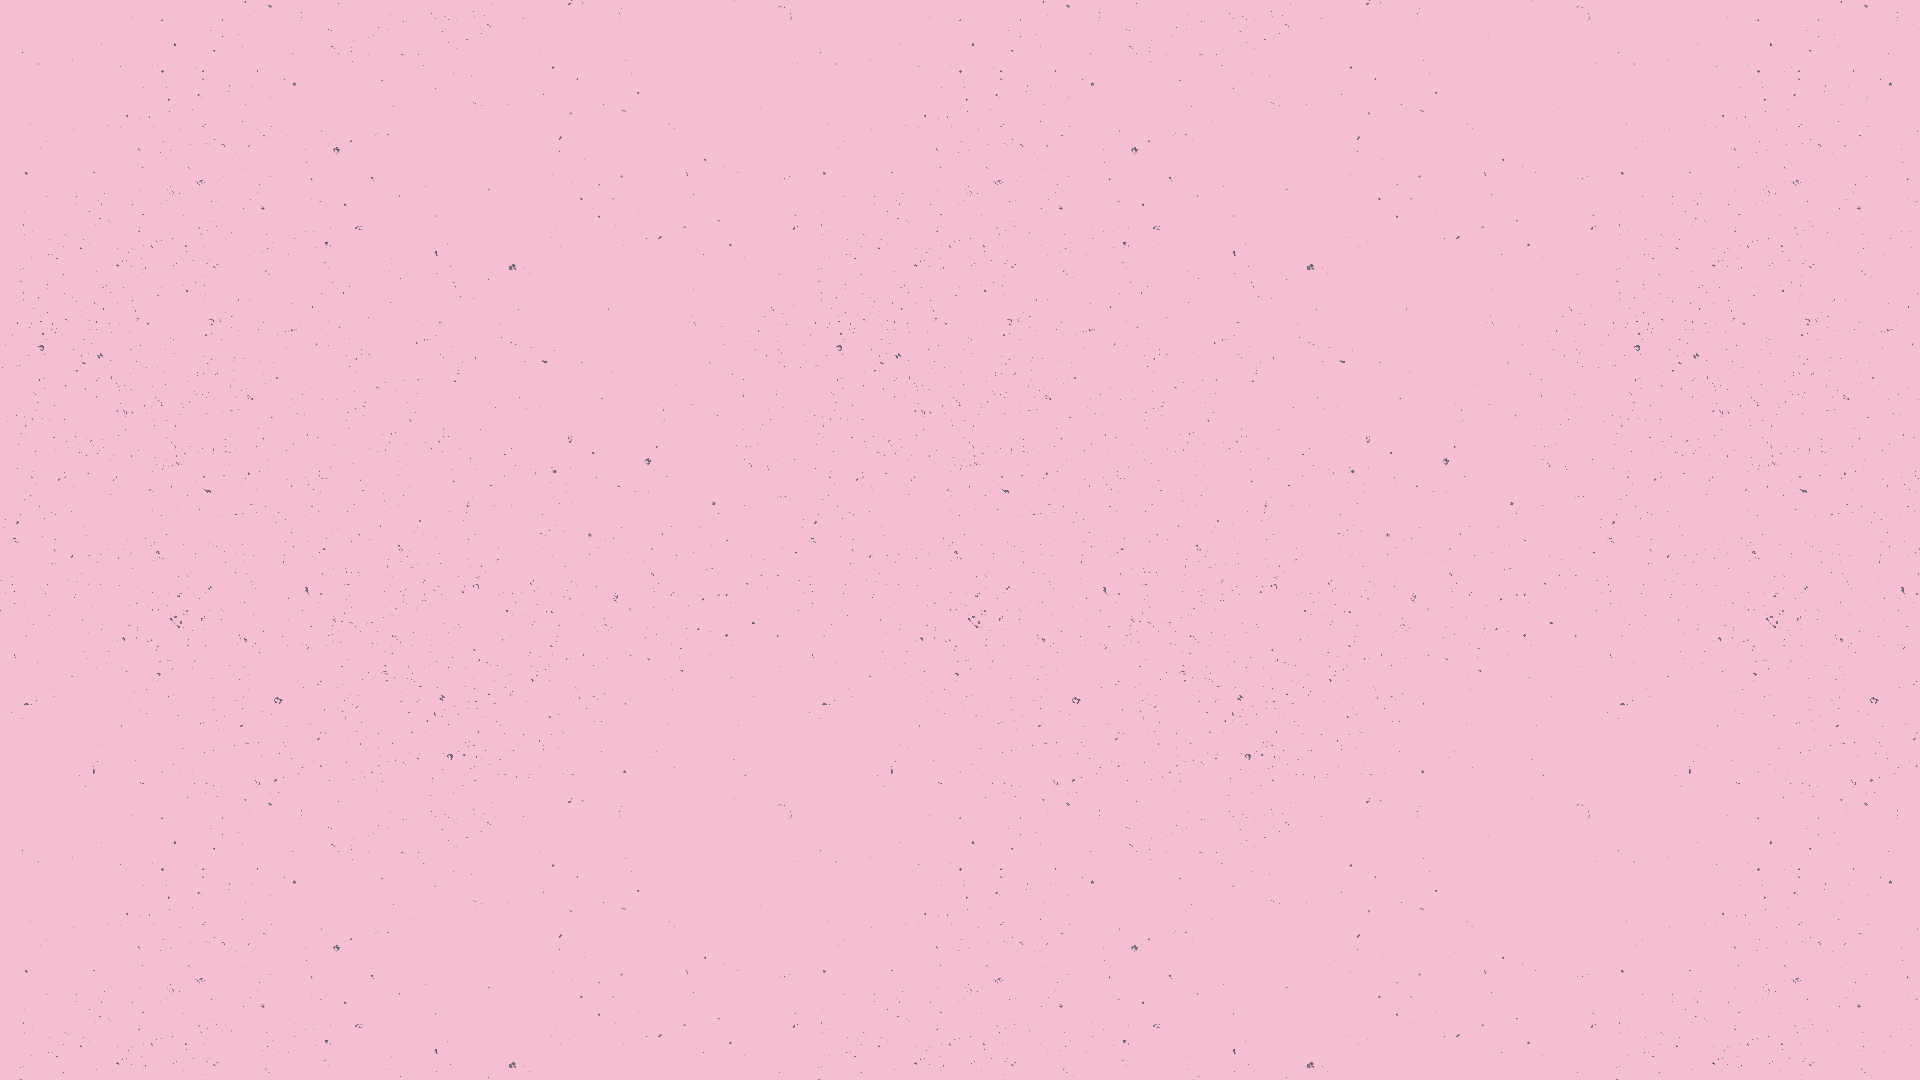 General 1920x1080 minimalism dots texture simple background stars dust